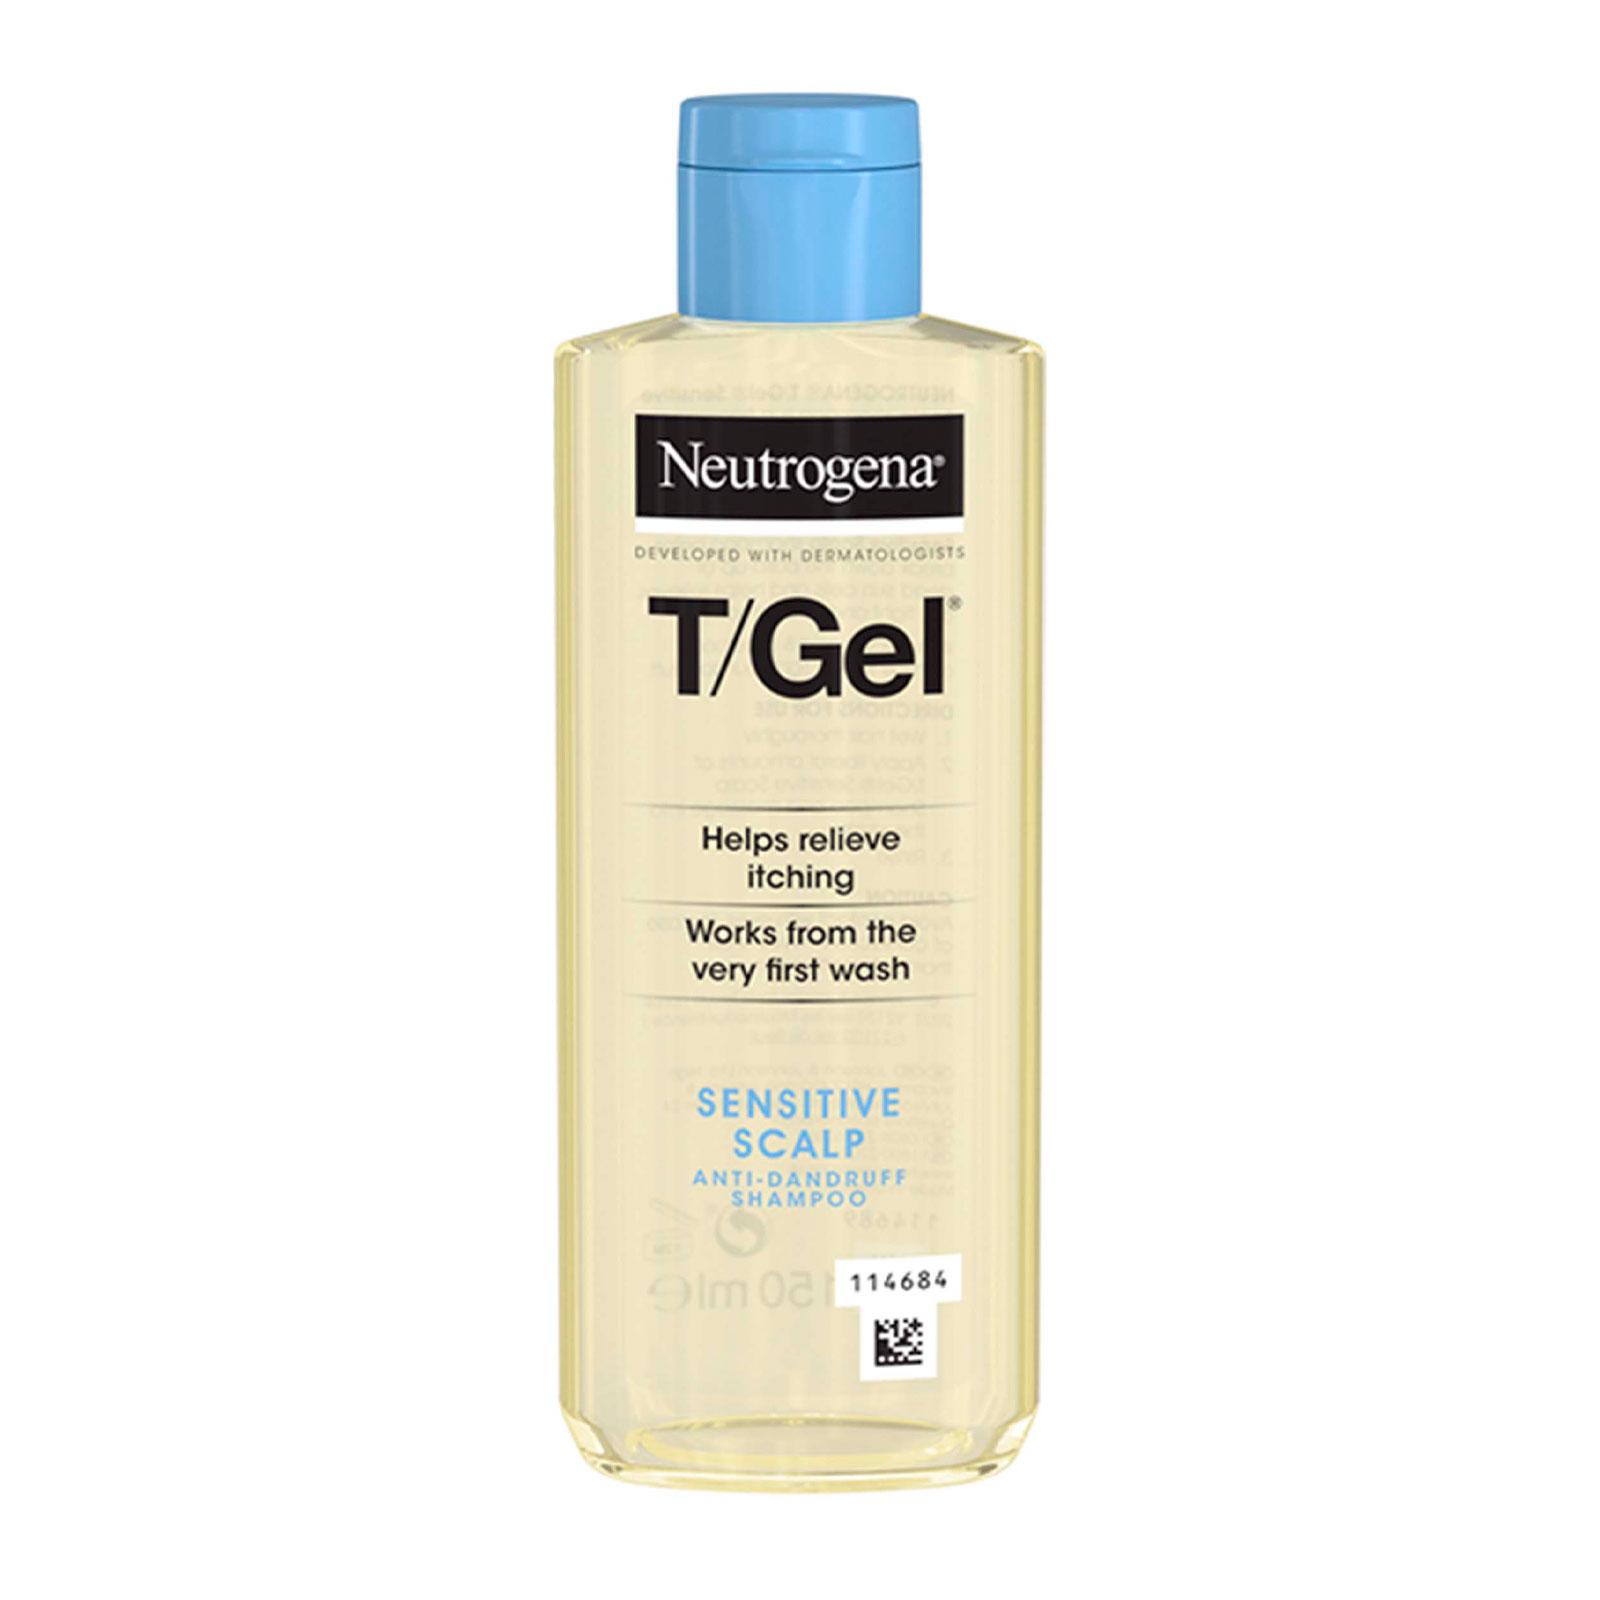 Neutrogena T/Gel Anti Dandruff Shampoo for Sensitive Scalp 150ml